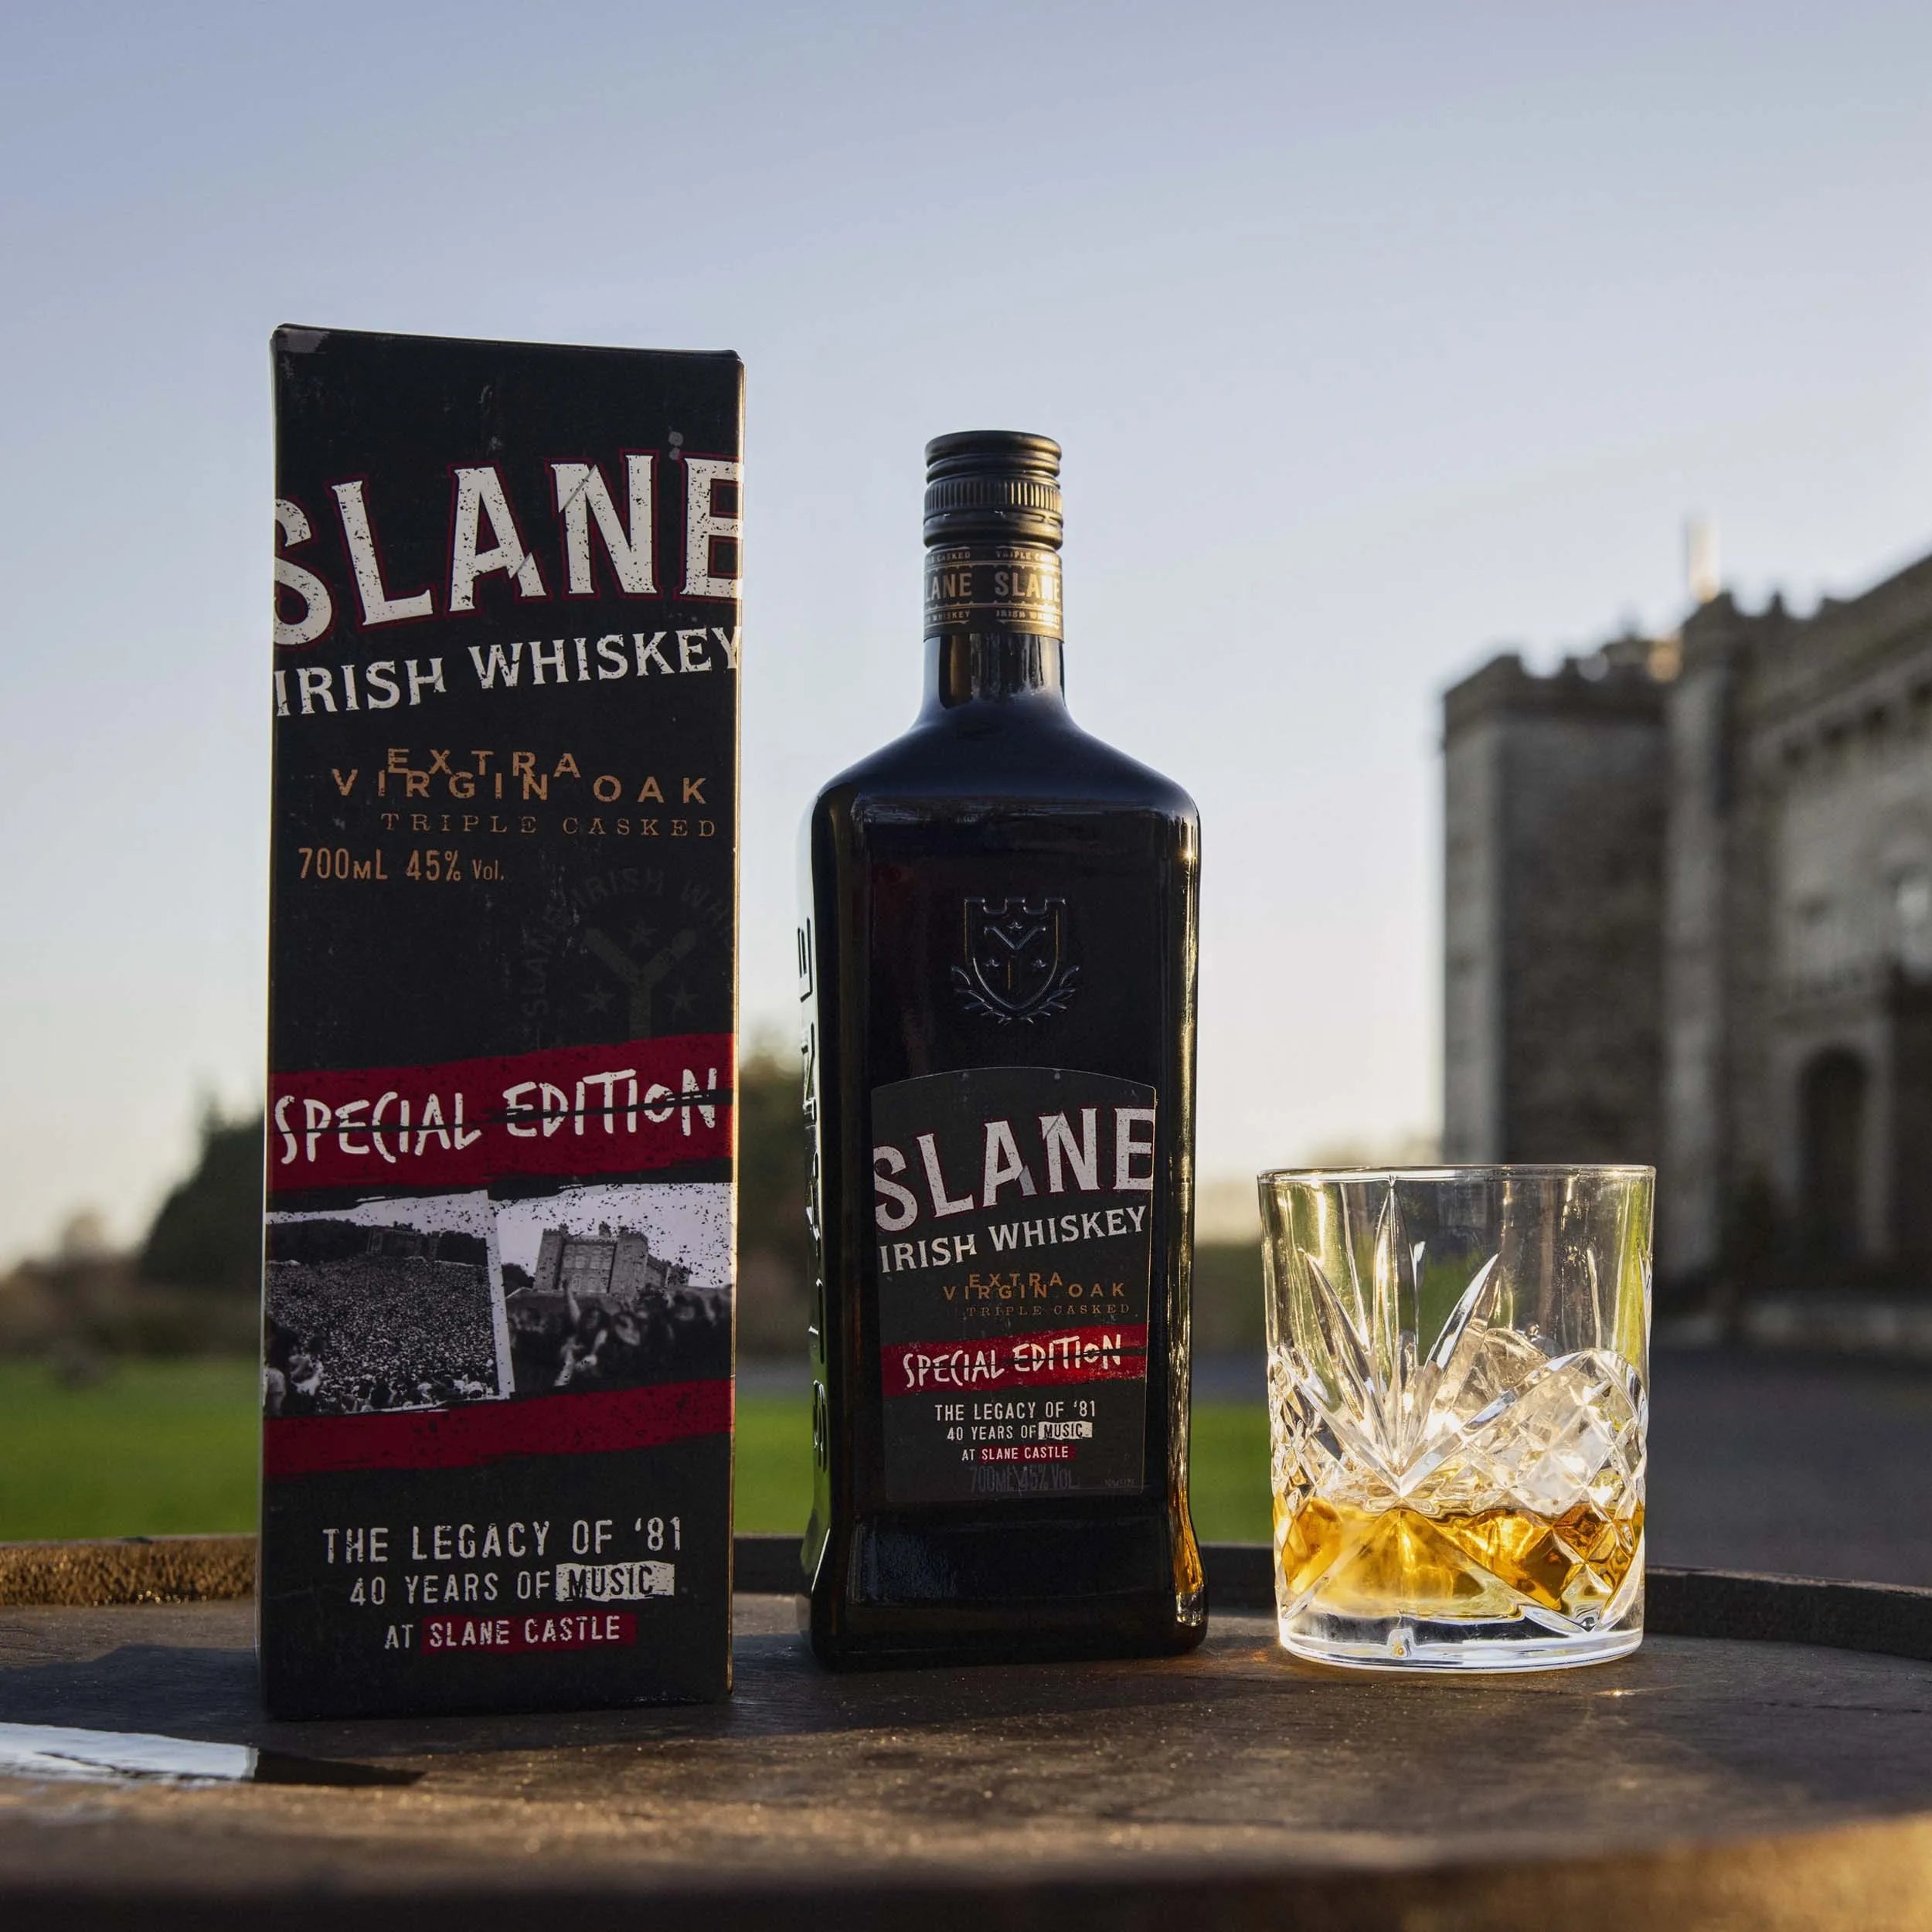 Slane Irish Extra Virgin Oak Triple Casked Special Edition The Legacy of 81 40th Anniversary